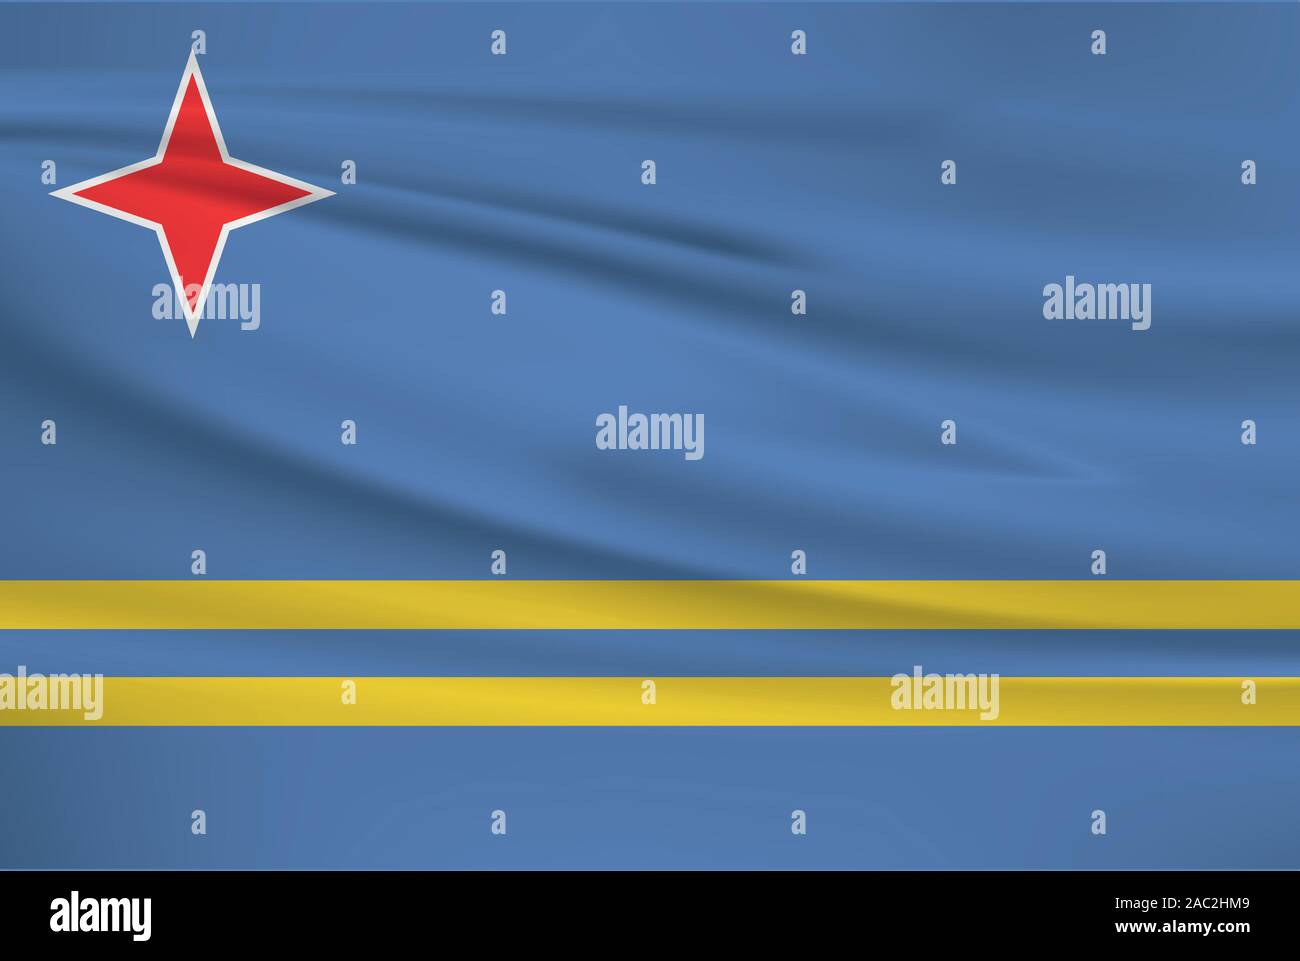 Waving Aruba flag, official colors and ratio correct. Aruba national flag. Vector illustration. Stock Vector